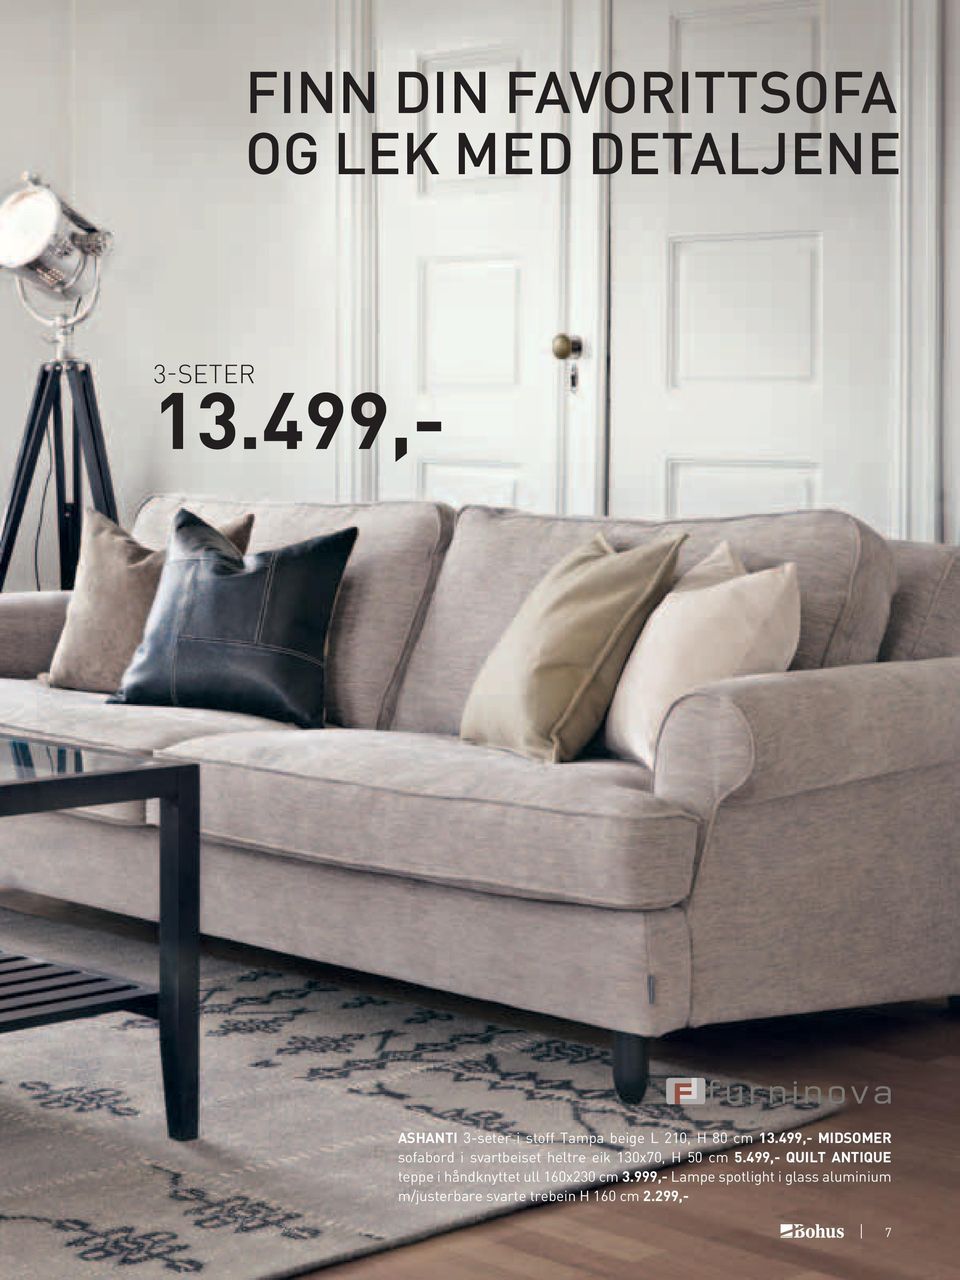 499,- MIDSOMER sofabord i svartbeiset heltre eik 130x70, H 50 cm 5.